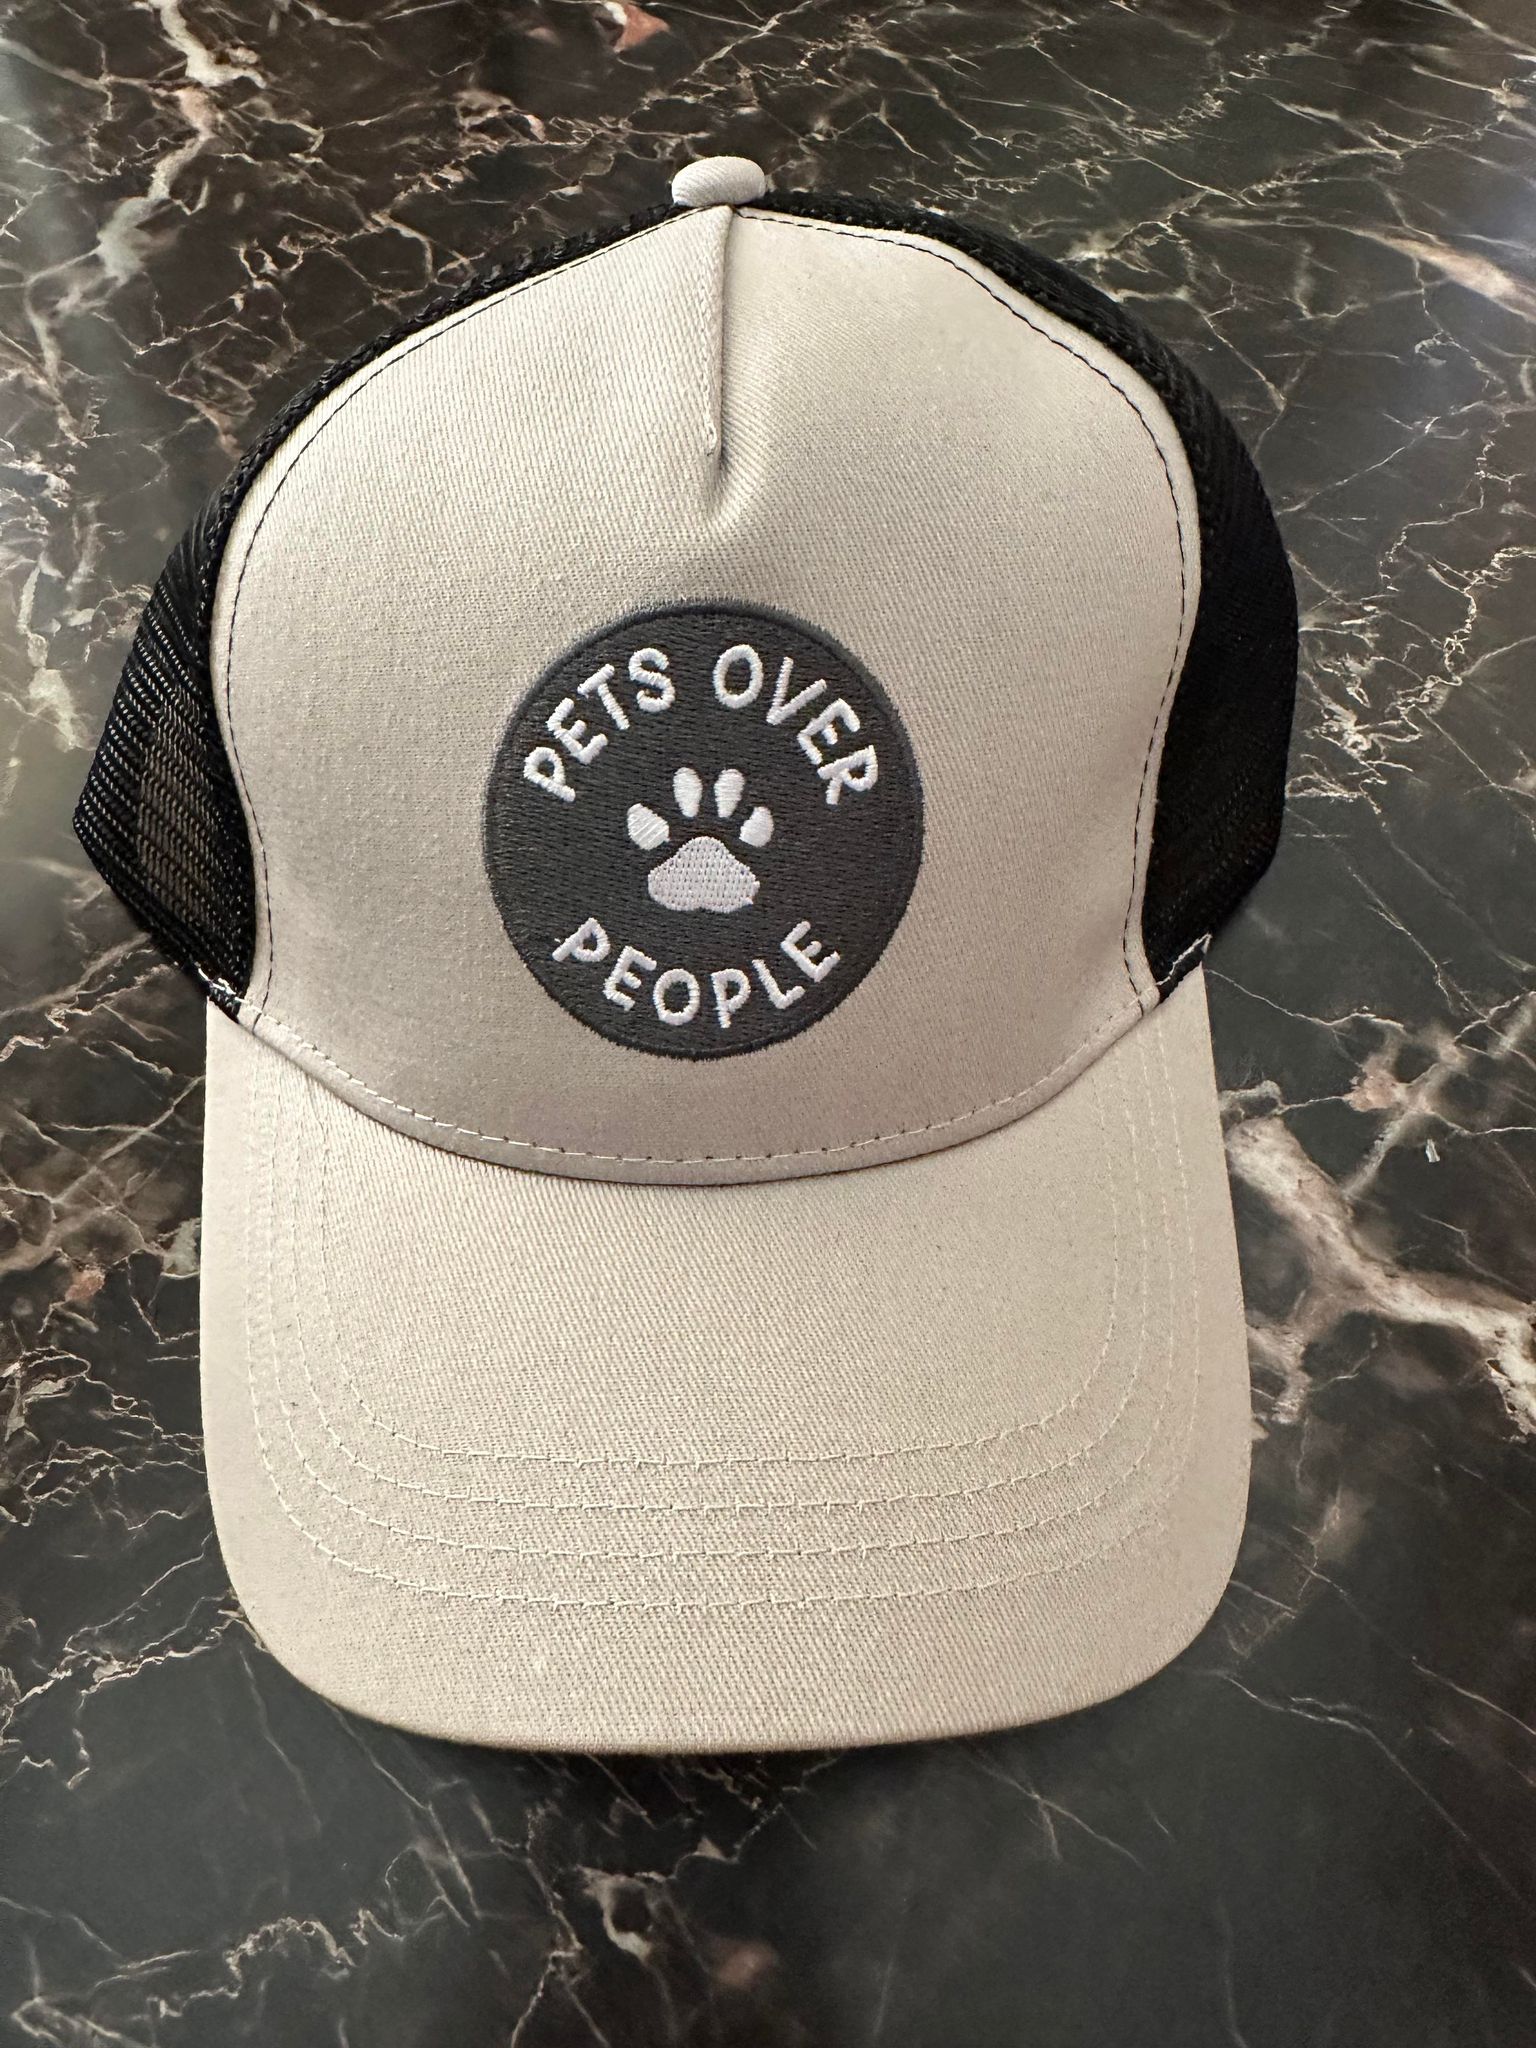 Pacific Brim Pets Over People Trucker Hat